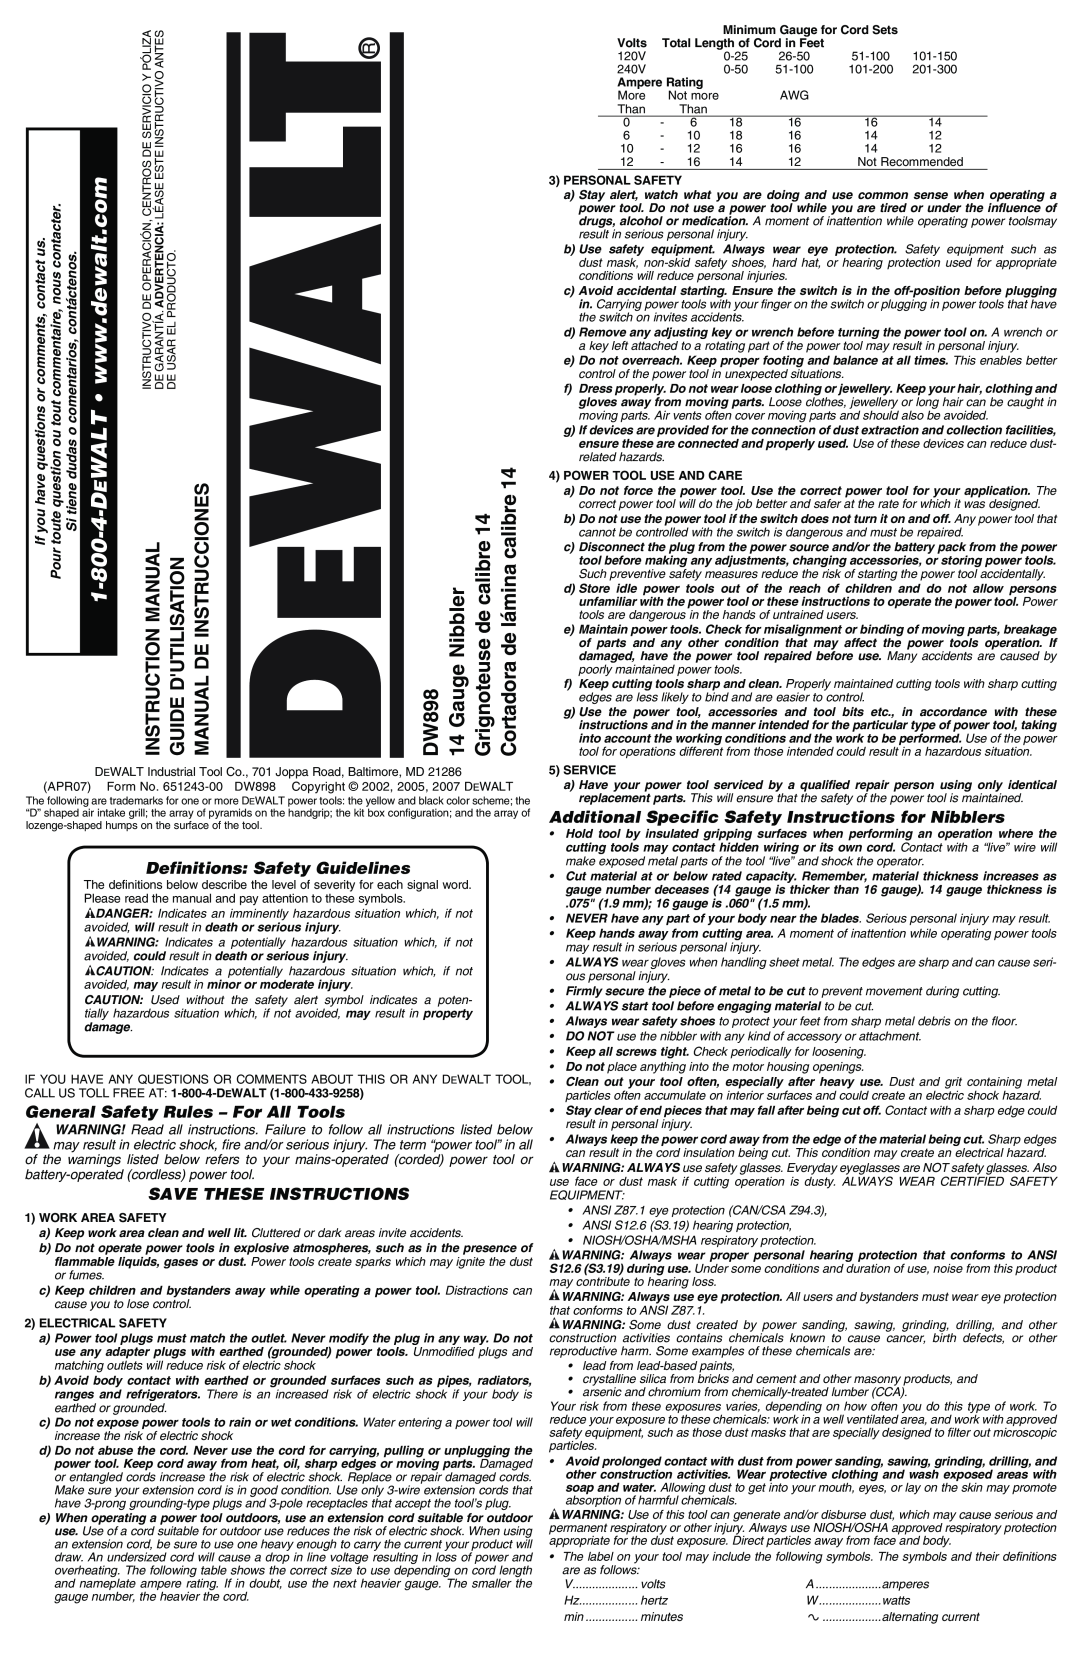 DeWalt DW898 instruction manual Instruction Manual, Guide Dutilisation Manual De Instrucciones, Work Area Safety, Volts 